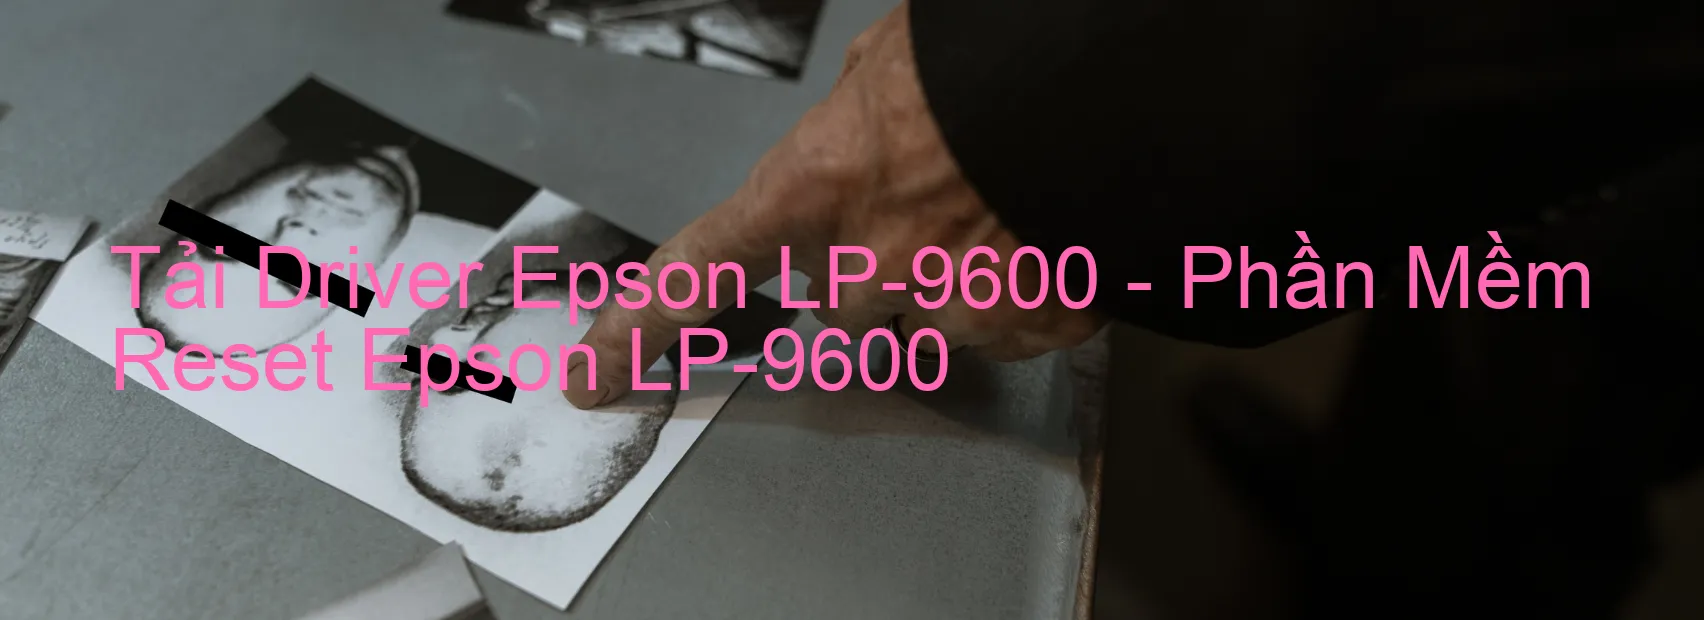 Driver Epson LP-9600, Phần Mềm Reset Epson LP-9600